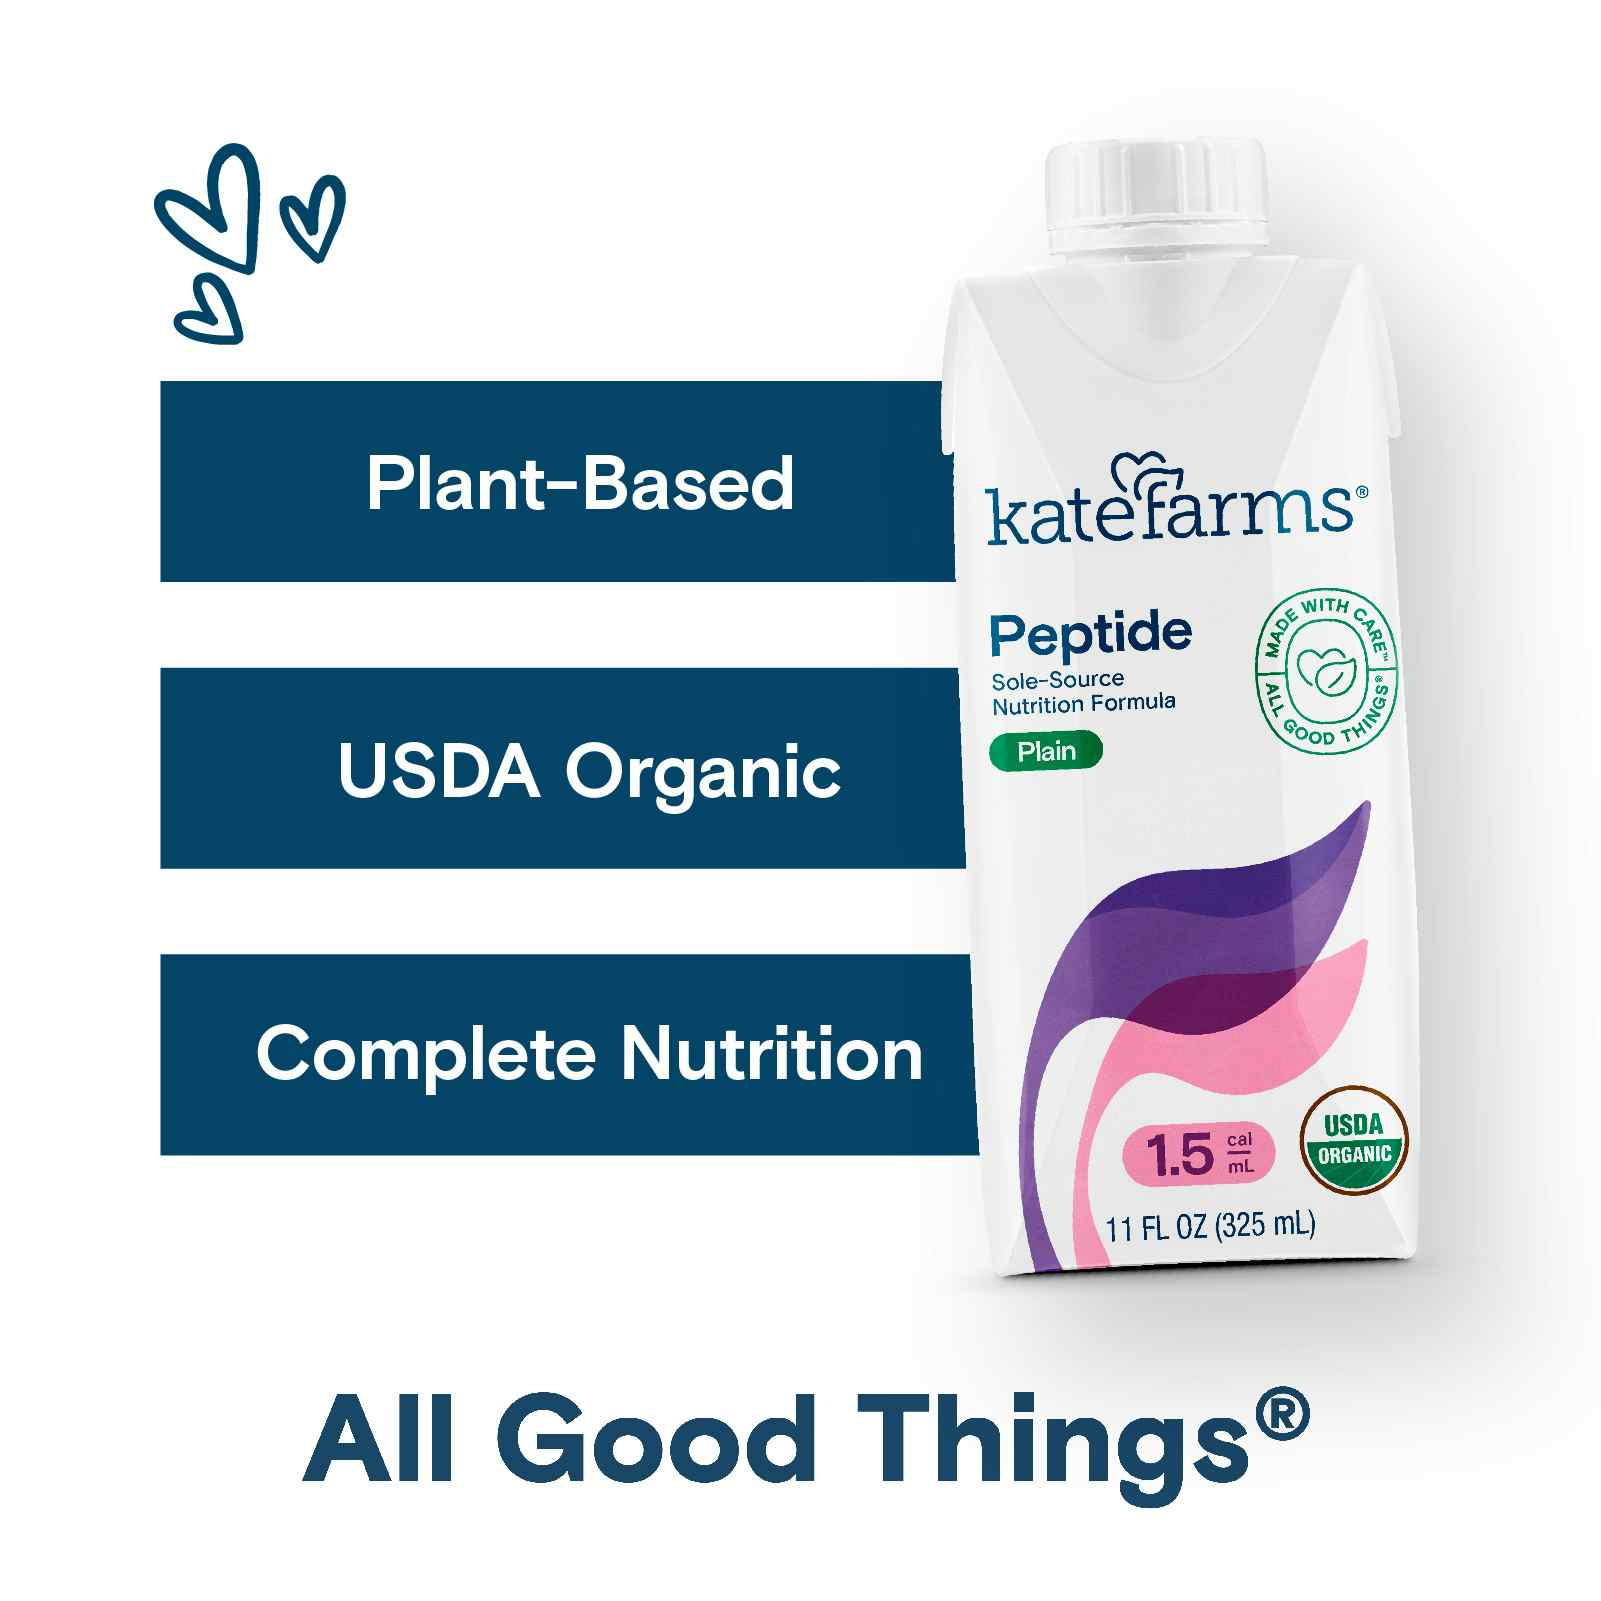 Kate Farms Peptide 1.5 Sole-Source Nutrition Formula, Plain, 11 oz.